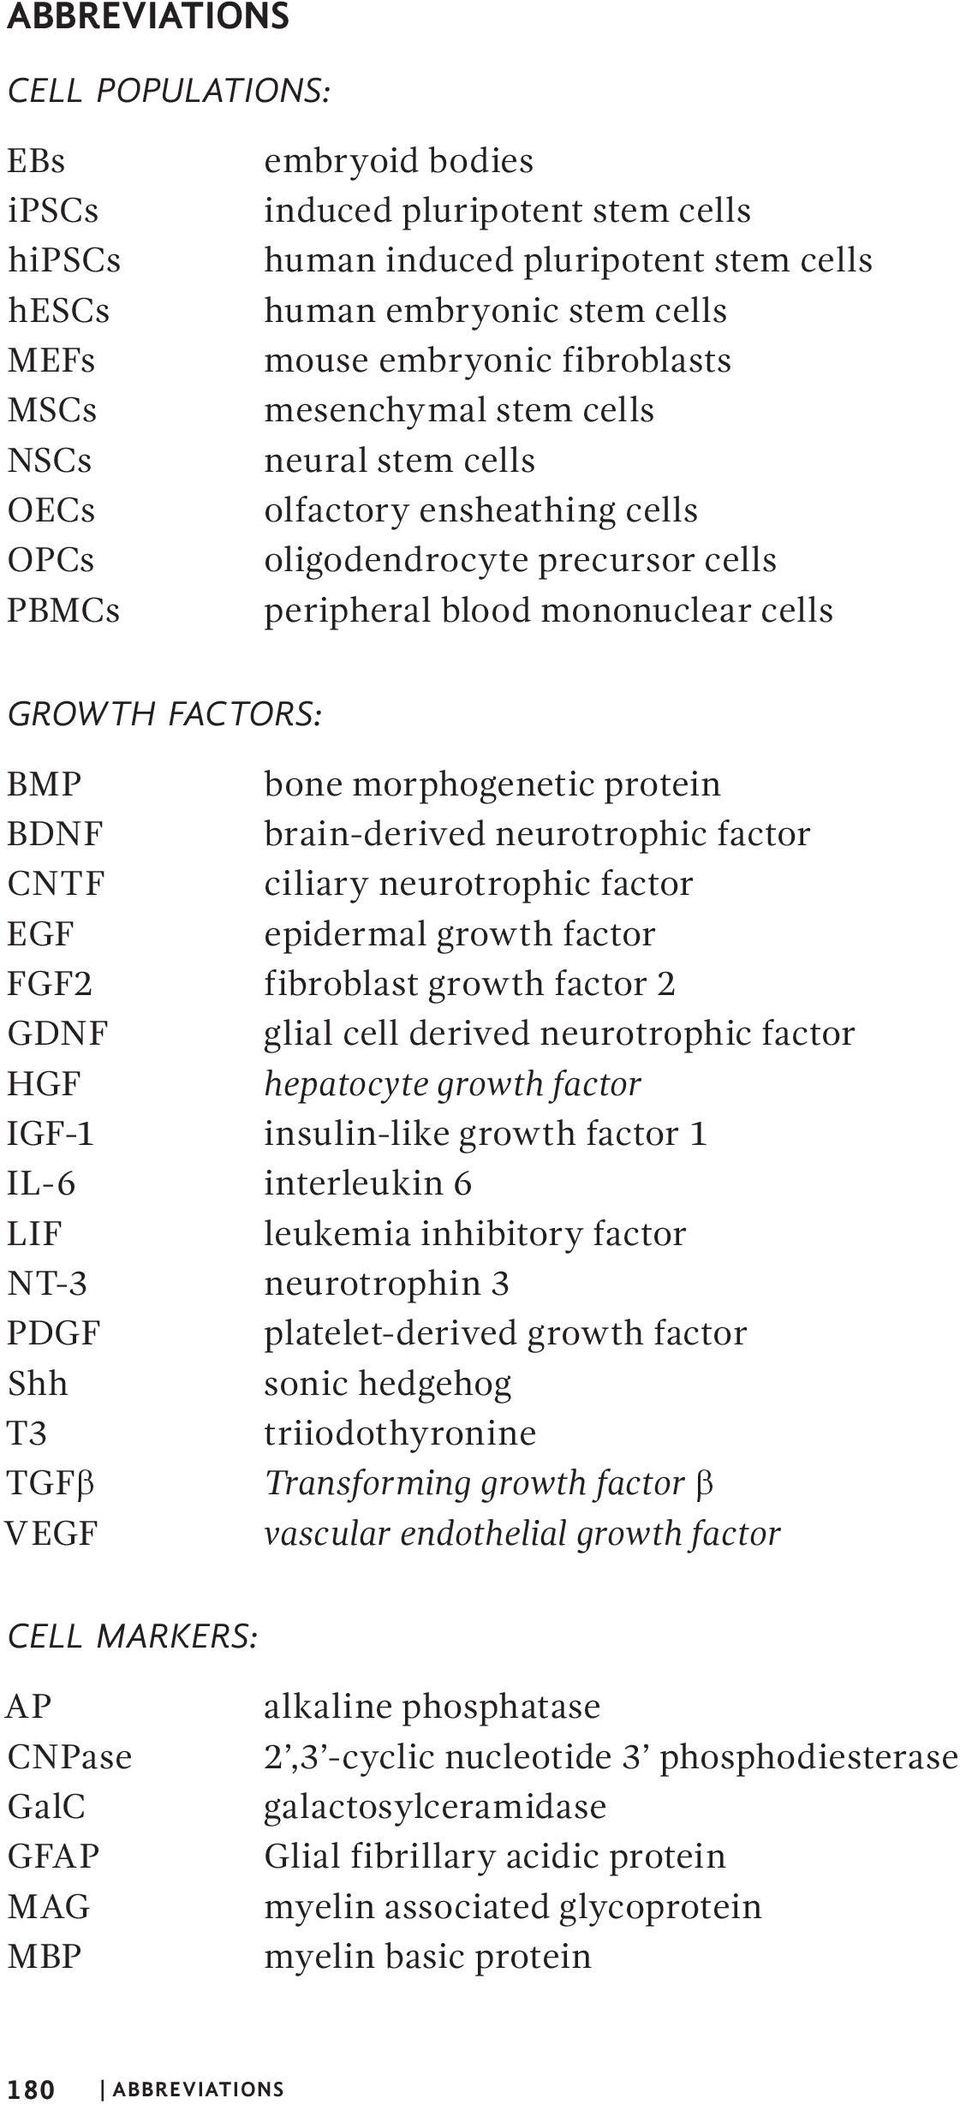 morphogenetic protein BDNF brain-derived neurotrophic factor CNTF ciliary neurotrophic factor EGF epidermal growth factor FGF2 fibroblast growth factor 2 GDNF glial cell derived neurotrophic factor